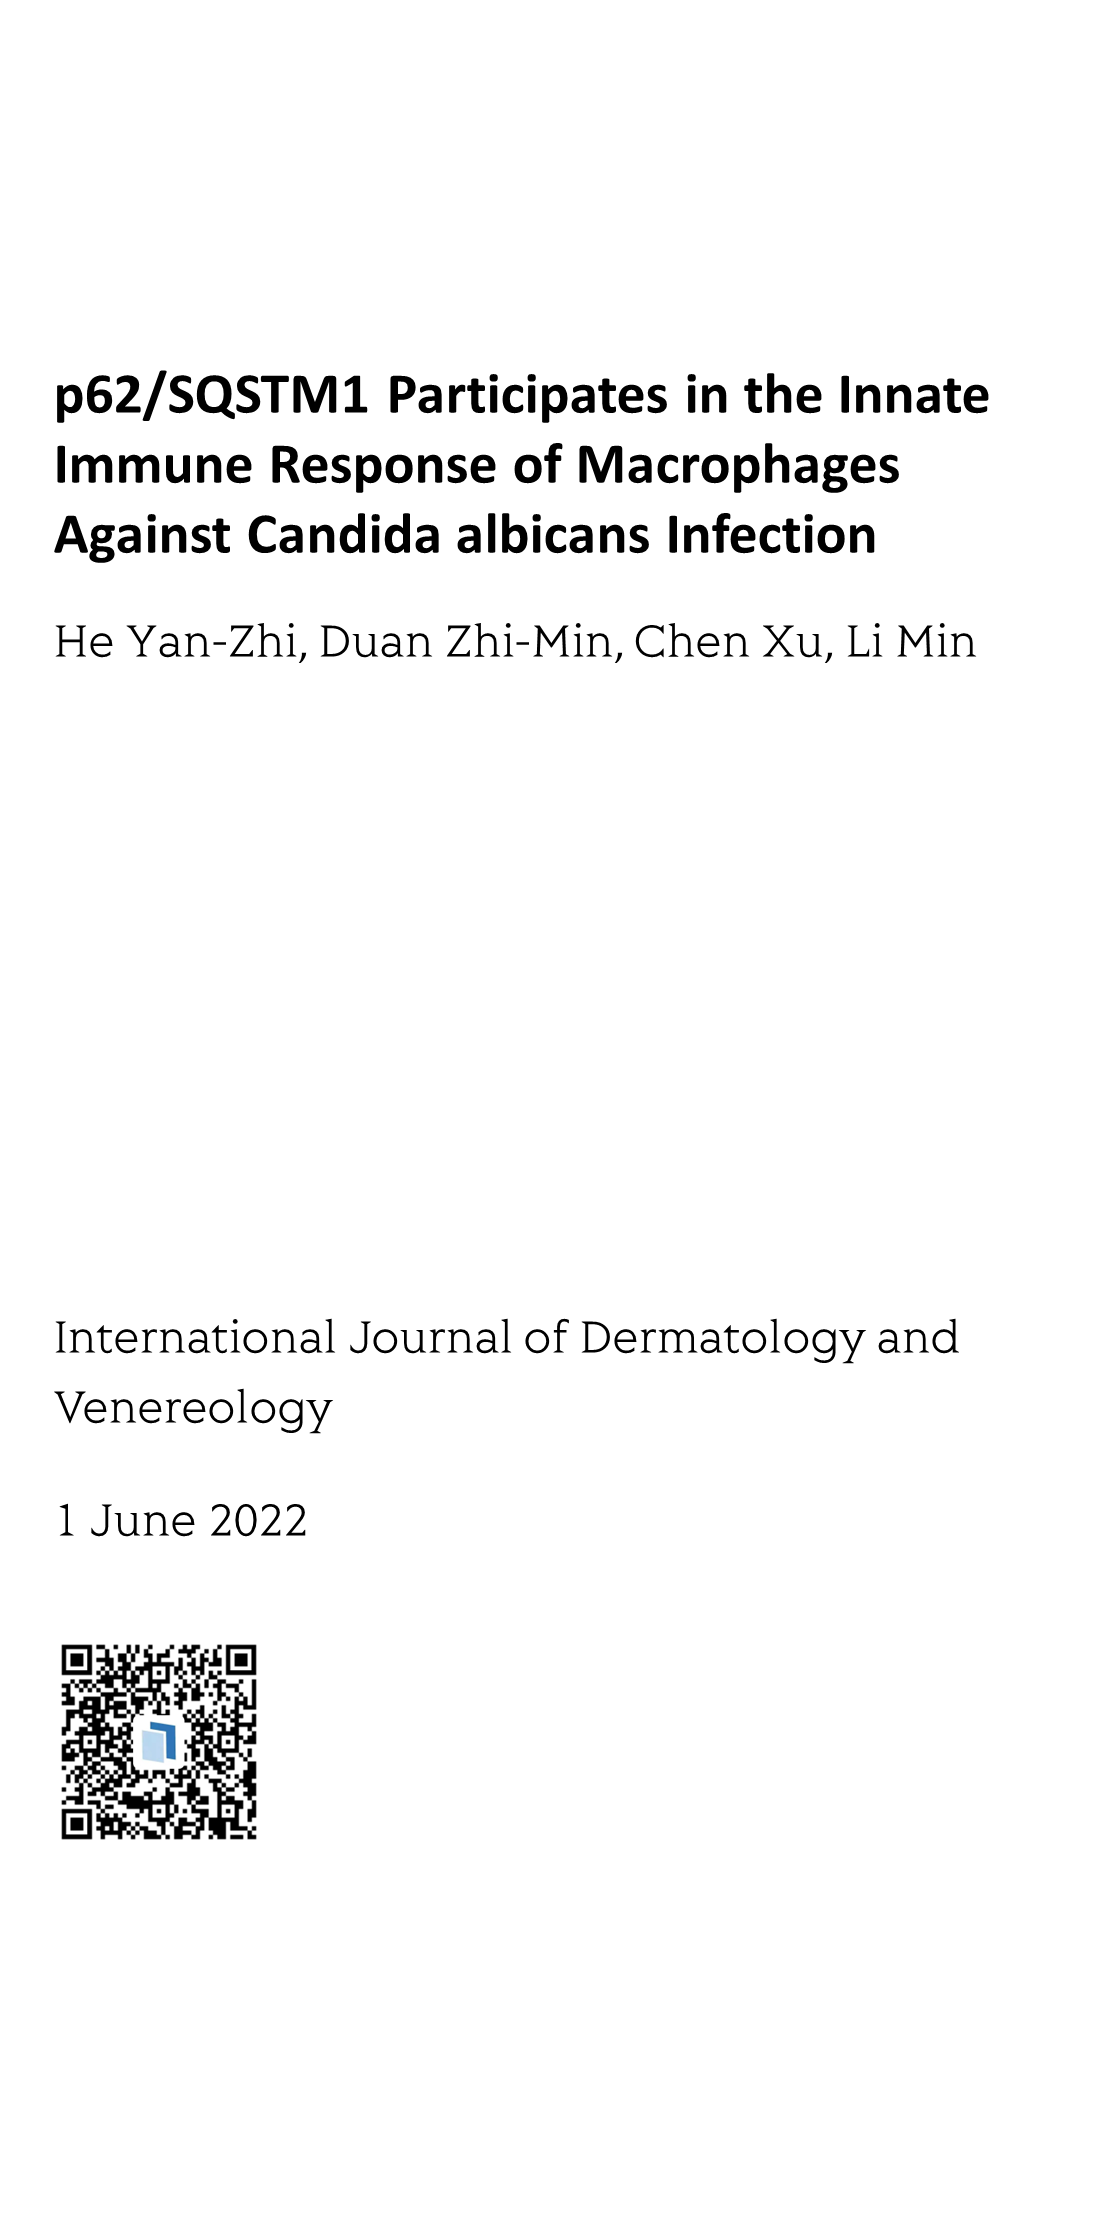 International Journal of Dermatology and Venereology_1